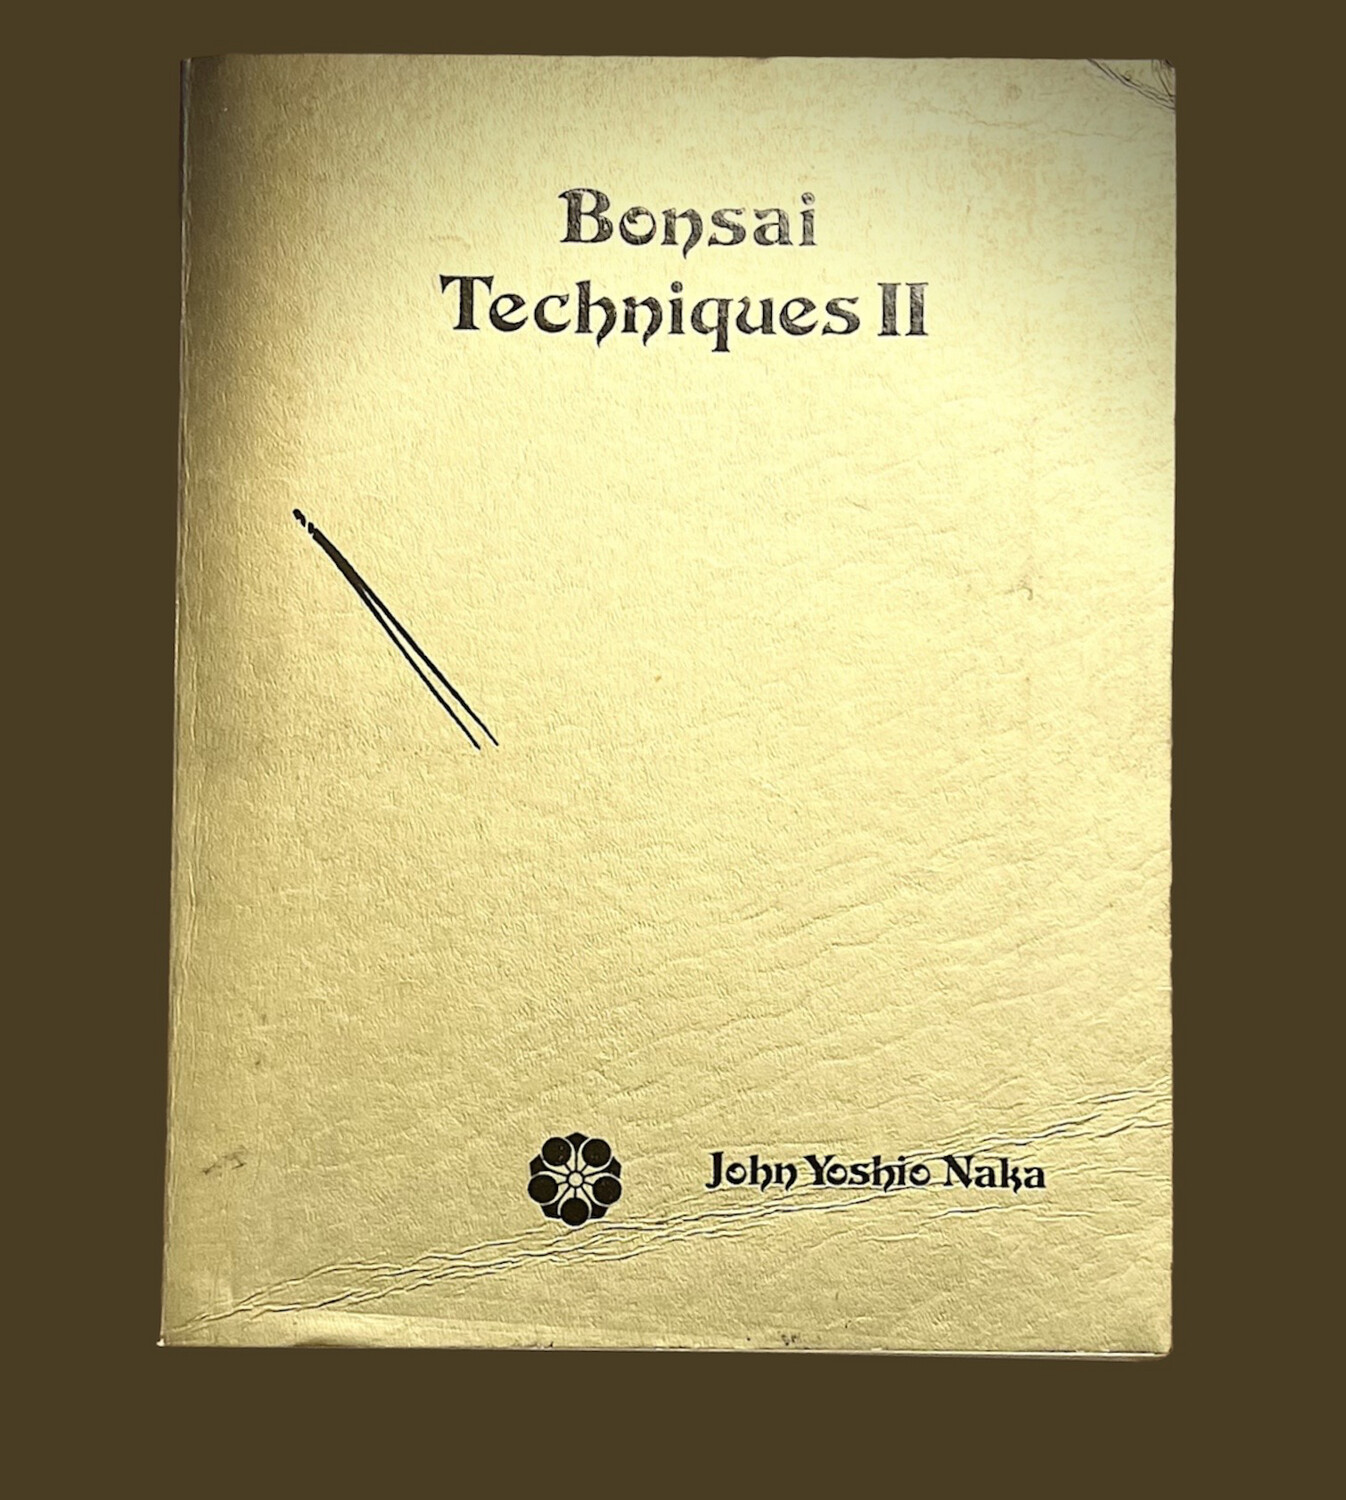 Bonsai Techniques II by John Naka - Signed book